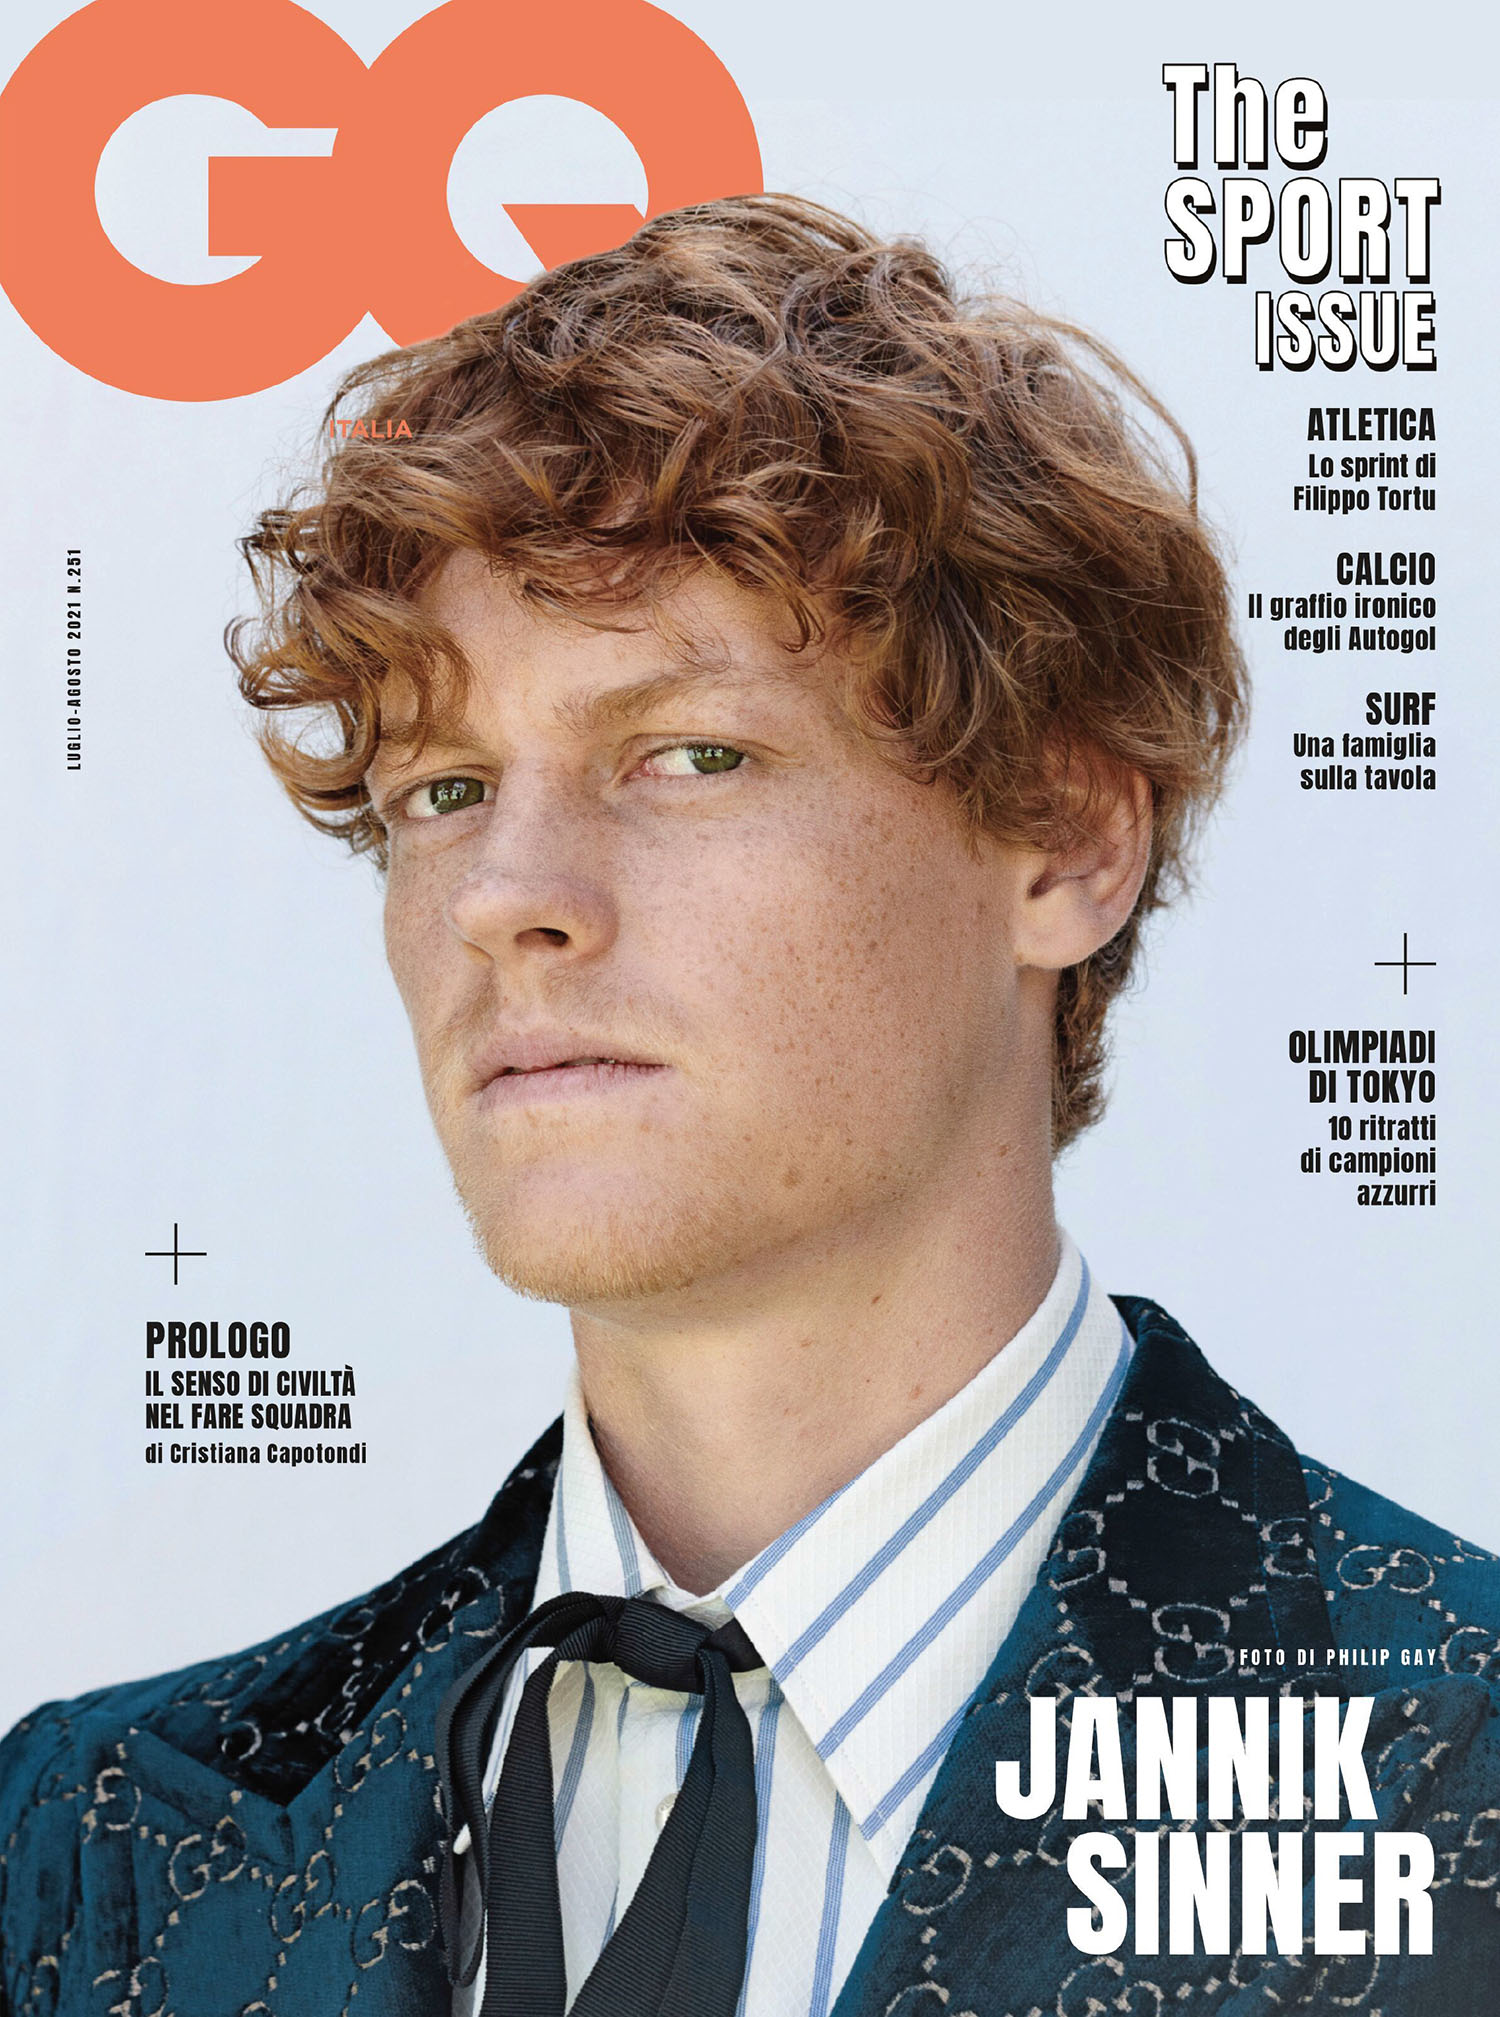 Jannik Sinner covers GQ Italia July-August 2021 by Philip Gay